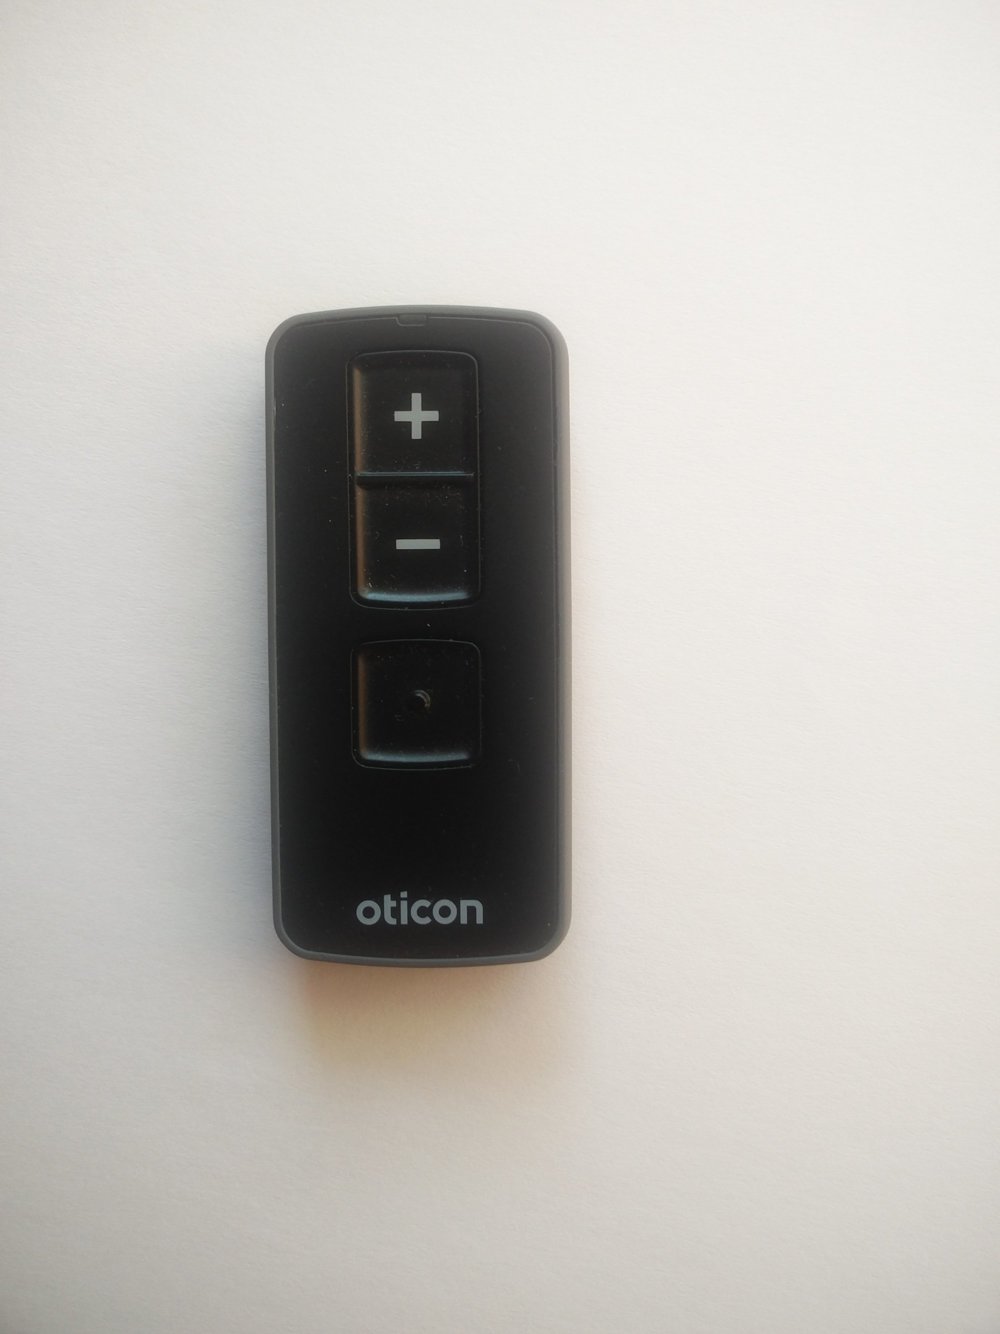 externer Lautstärkeregler "Oticon" für ein Hörgerät - fast neuwertig